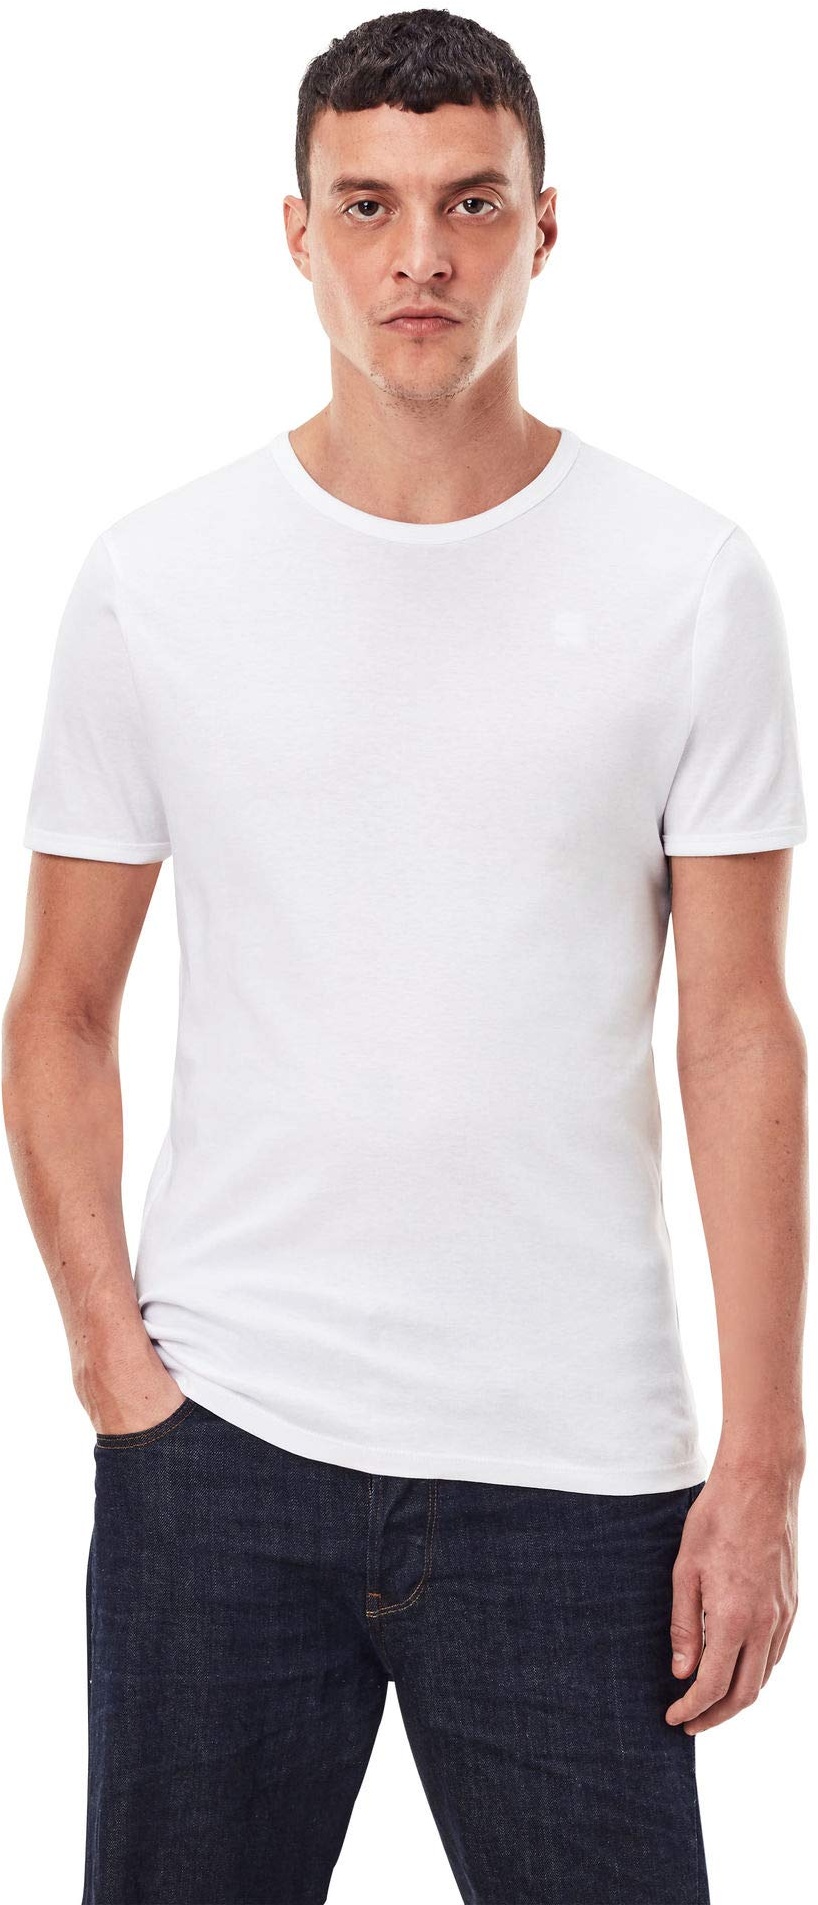 G-STAR RAW Herren Basic T-Shirt 2-Pack, Weiß (white D07205-124-110), S